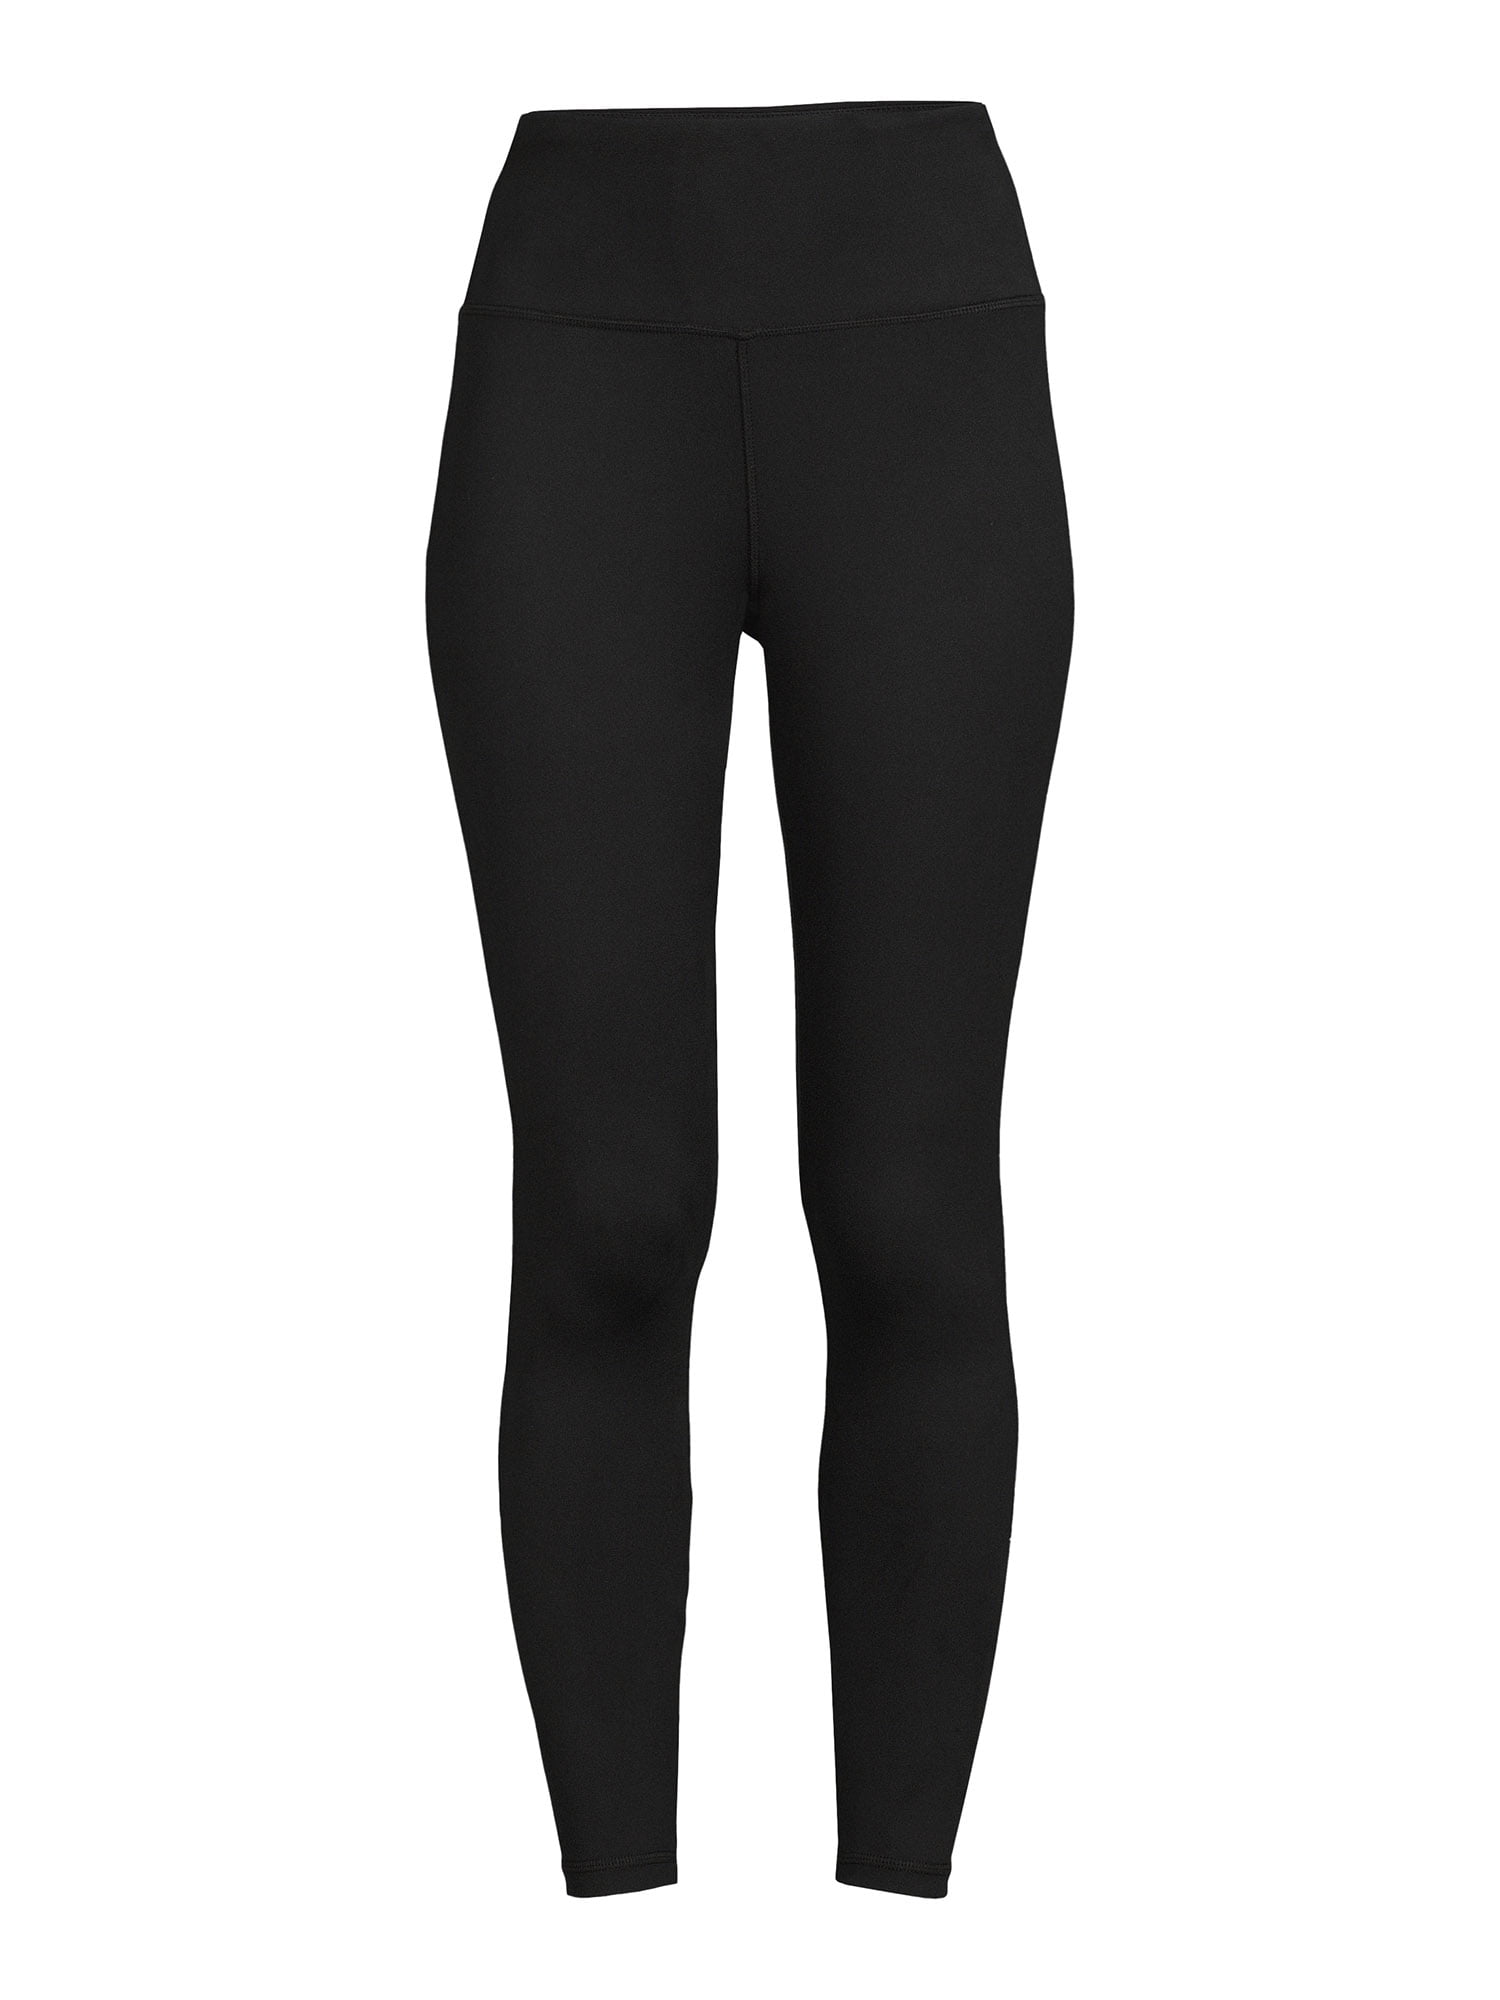 Jockey smart shapers high waisted cotton leggings black xxl new upc  070010656535